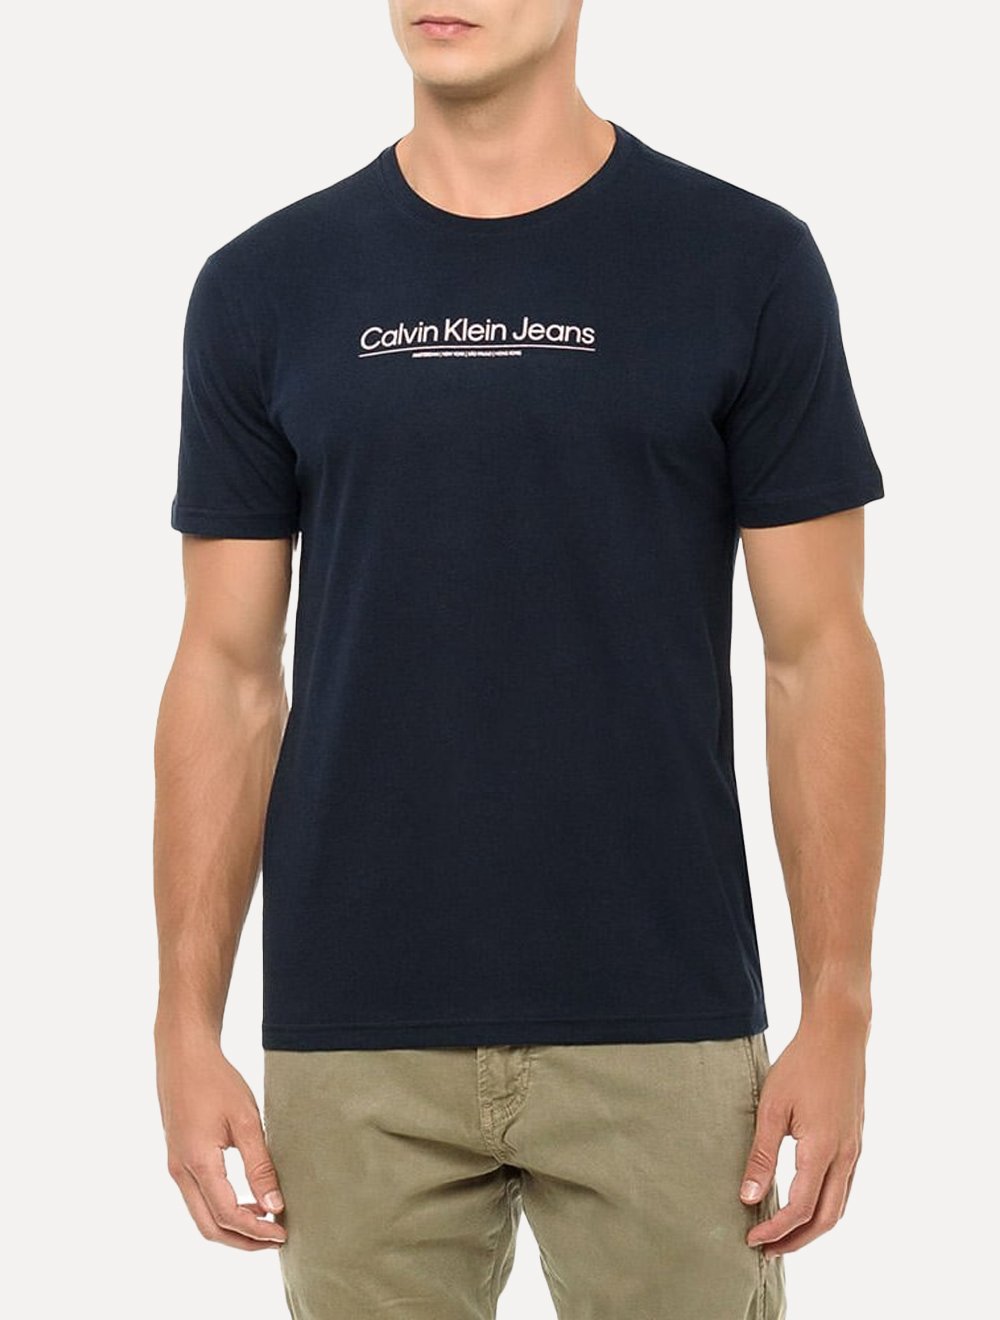 Camiseta Calvin Klein Jeans Masculina Slim Estampa Centro Cidades Azul Marinho